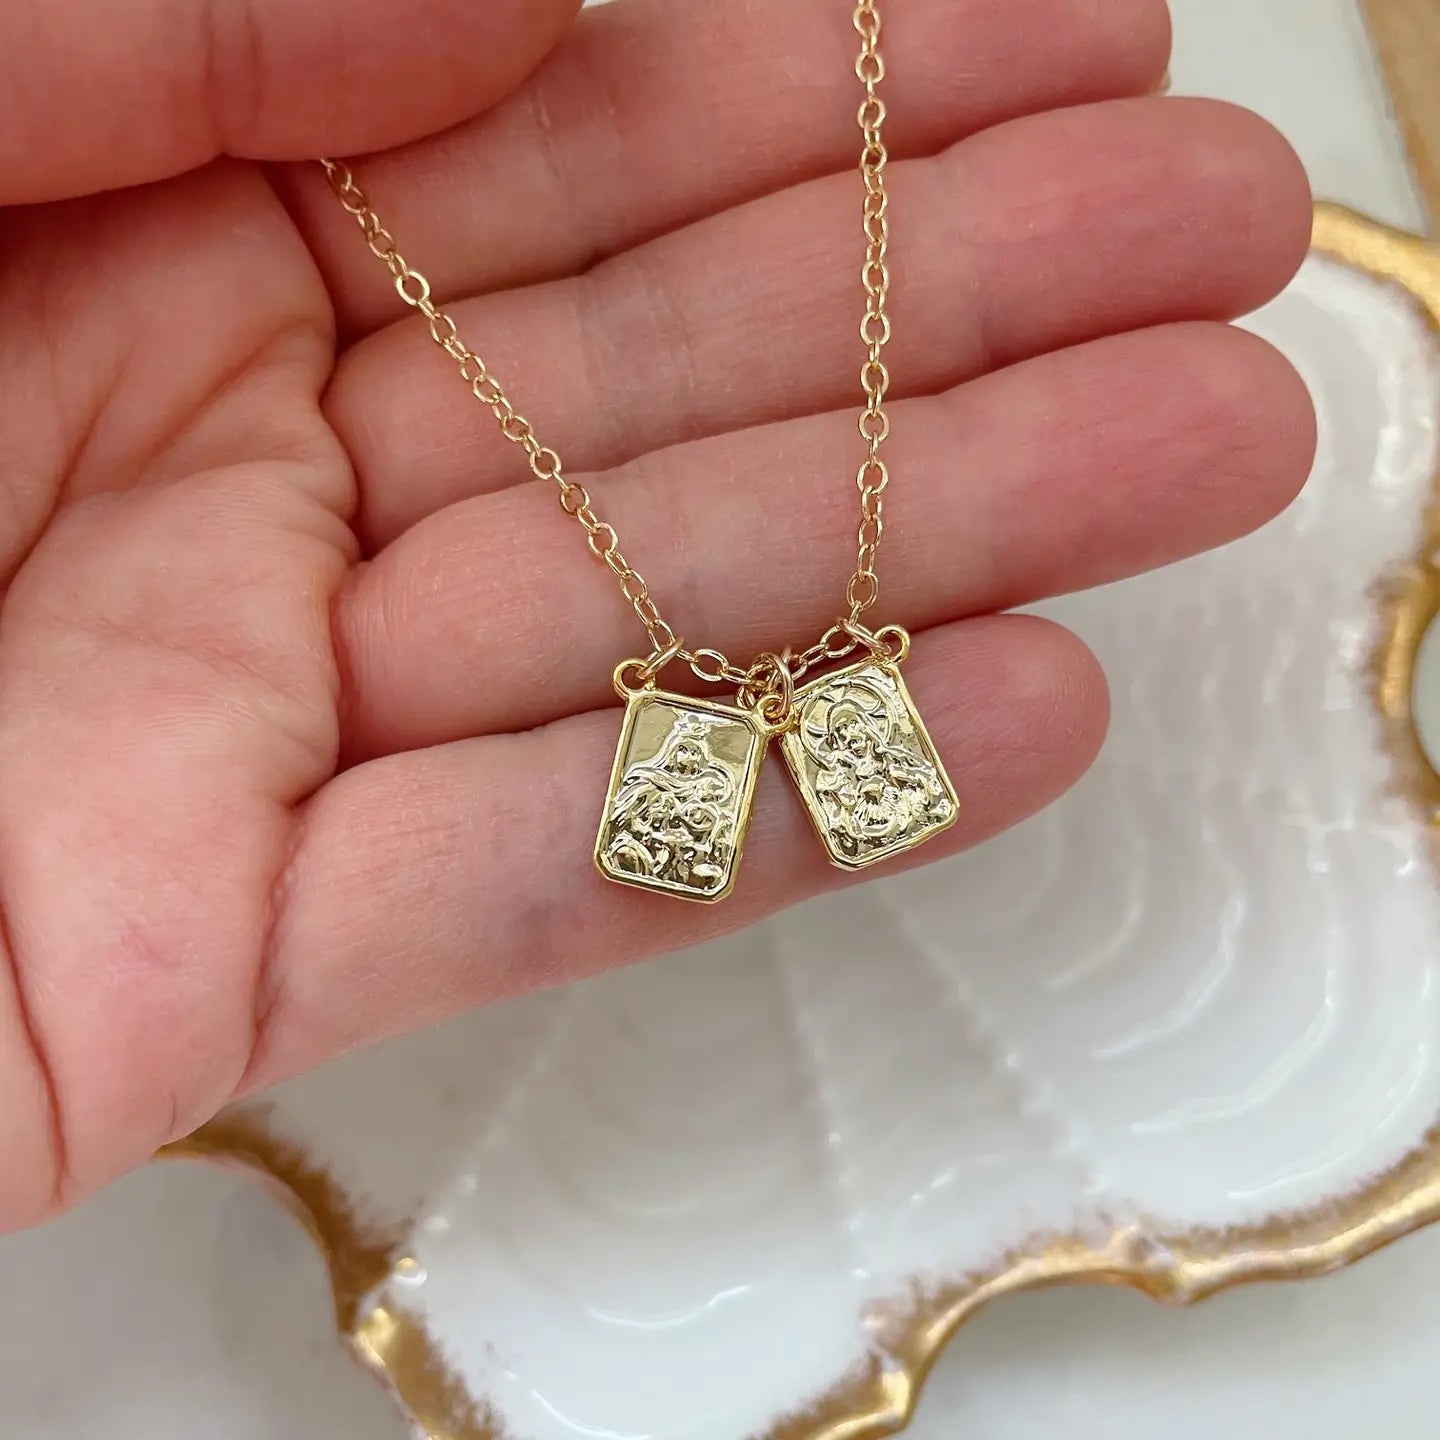 Laalee Jewelry - Scapular Necklace